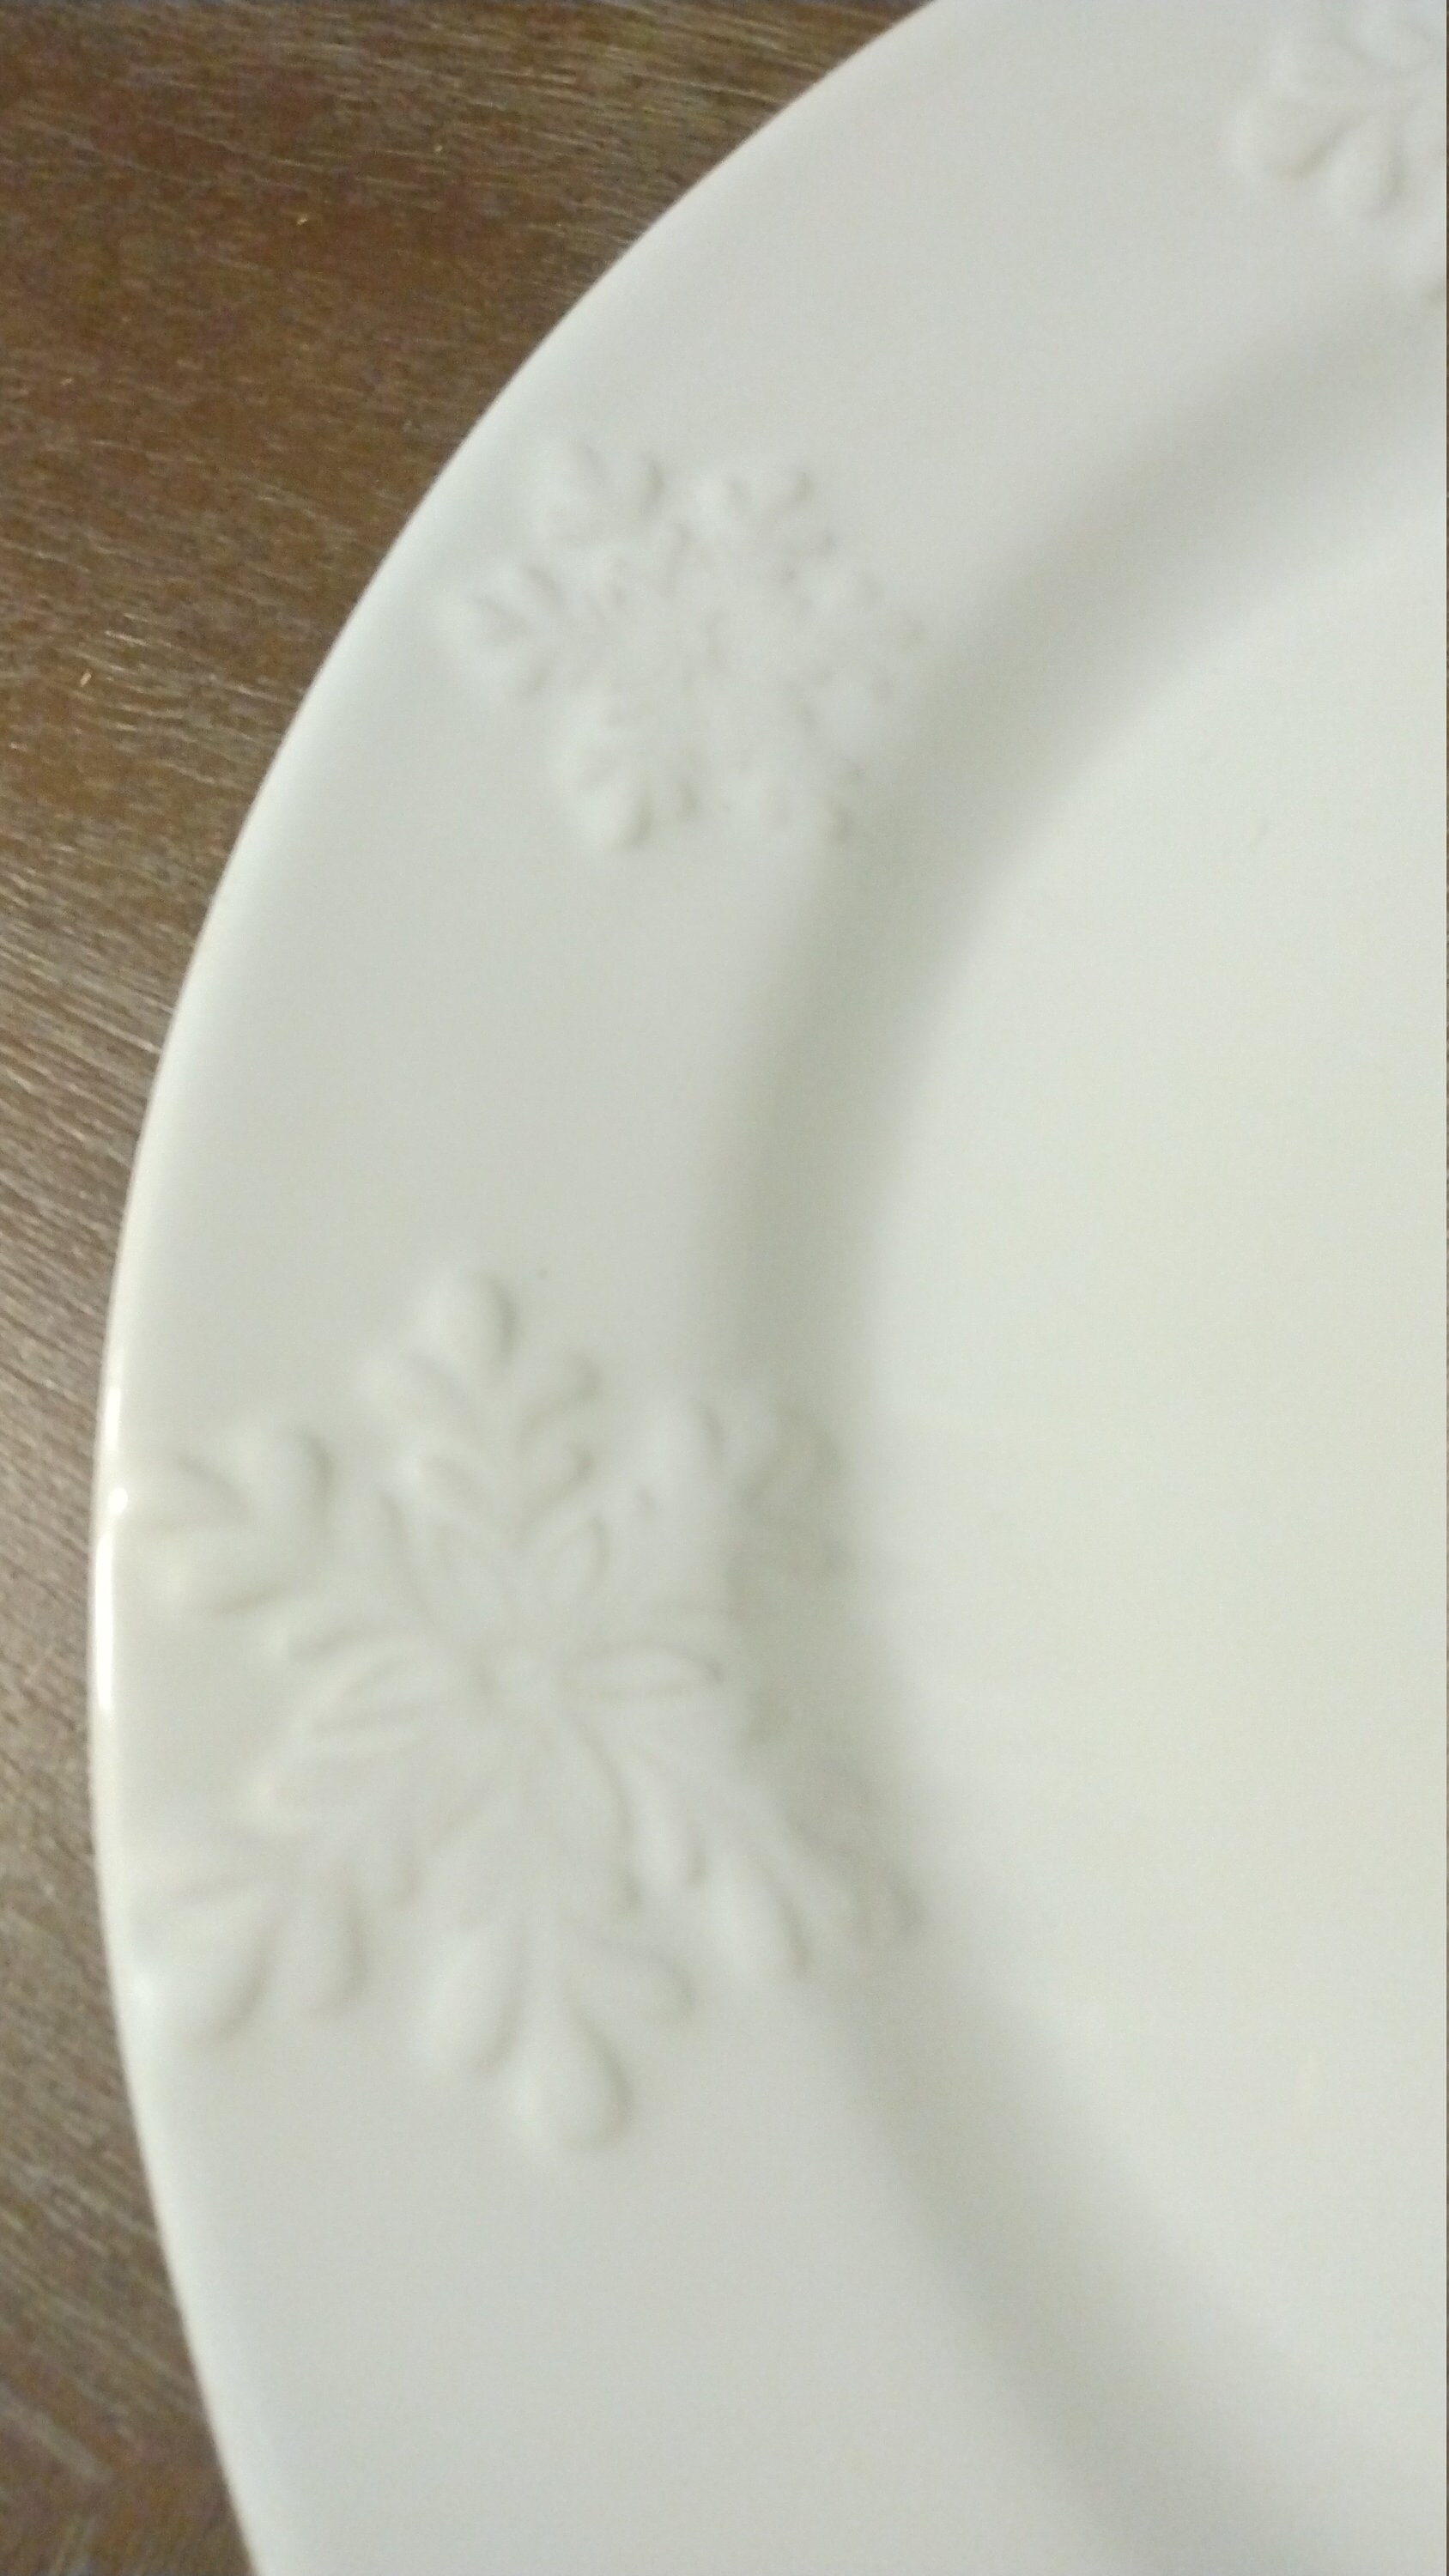 VejiA Beautiful Handmade Tableware 12-Inch Thick-Edged round Plate Ceramic  Plate round Shallow Platter Western Plate Steak Plate Restaurant Plate/10